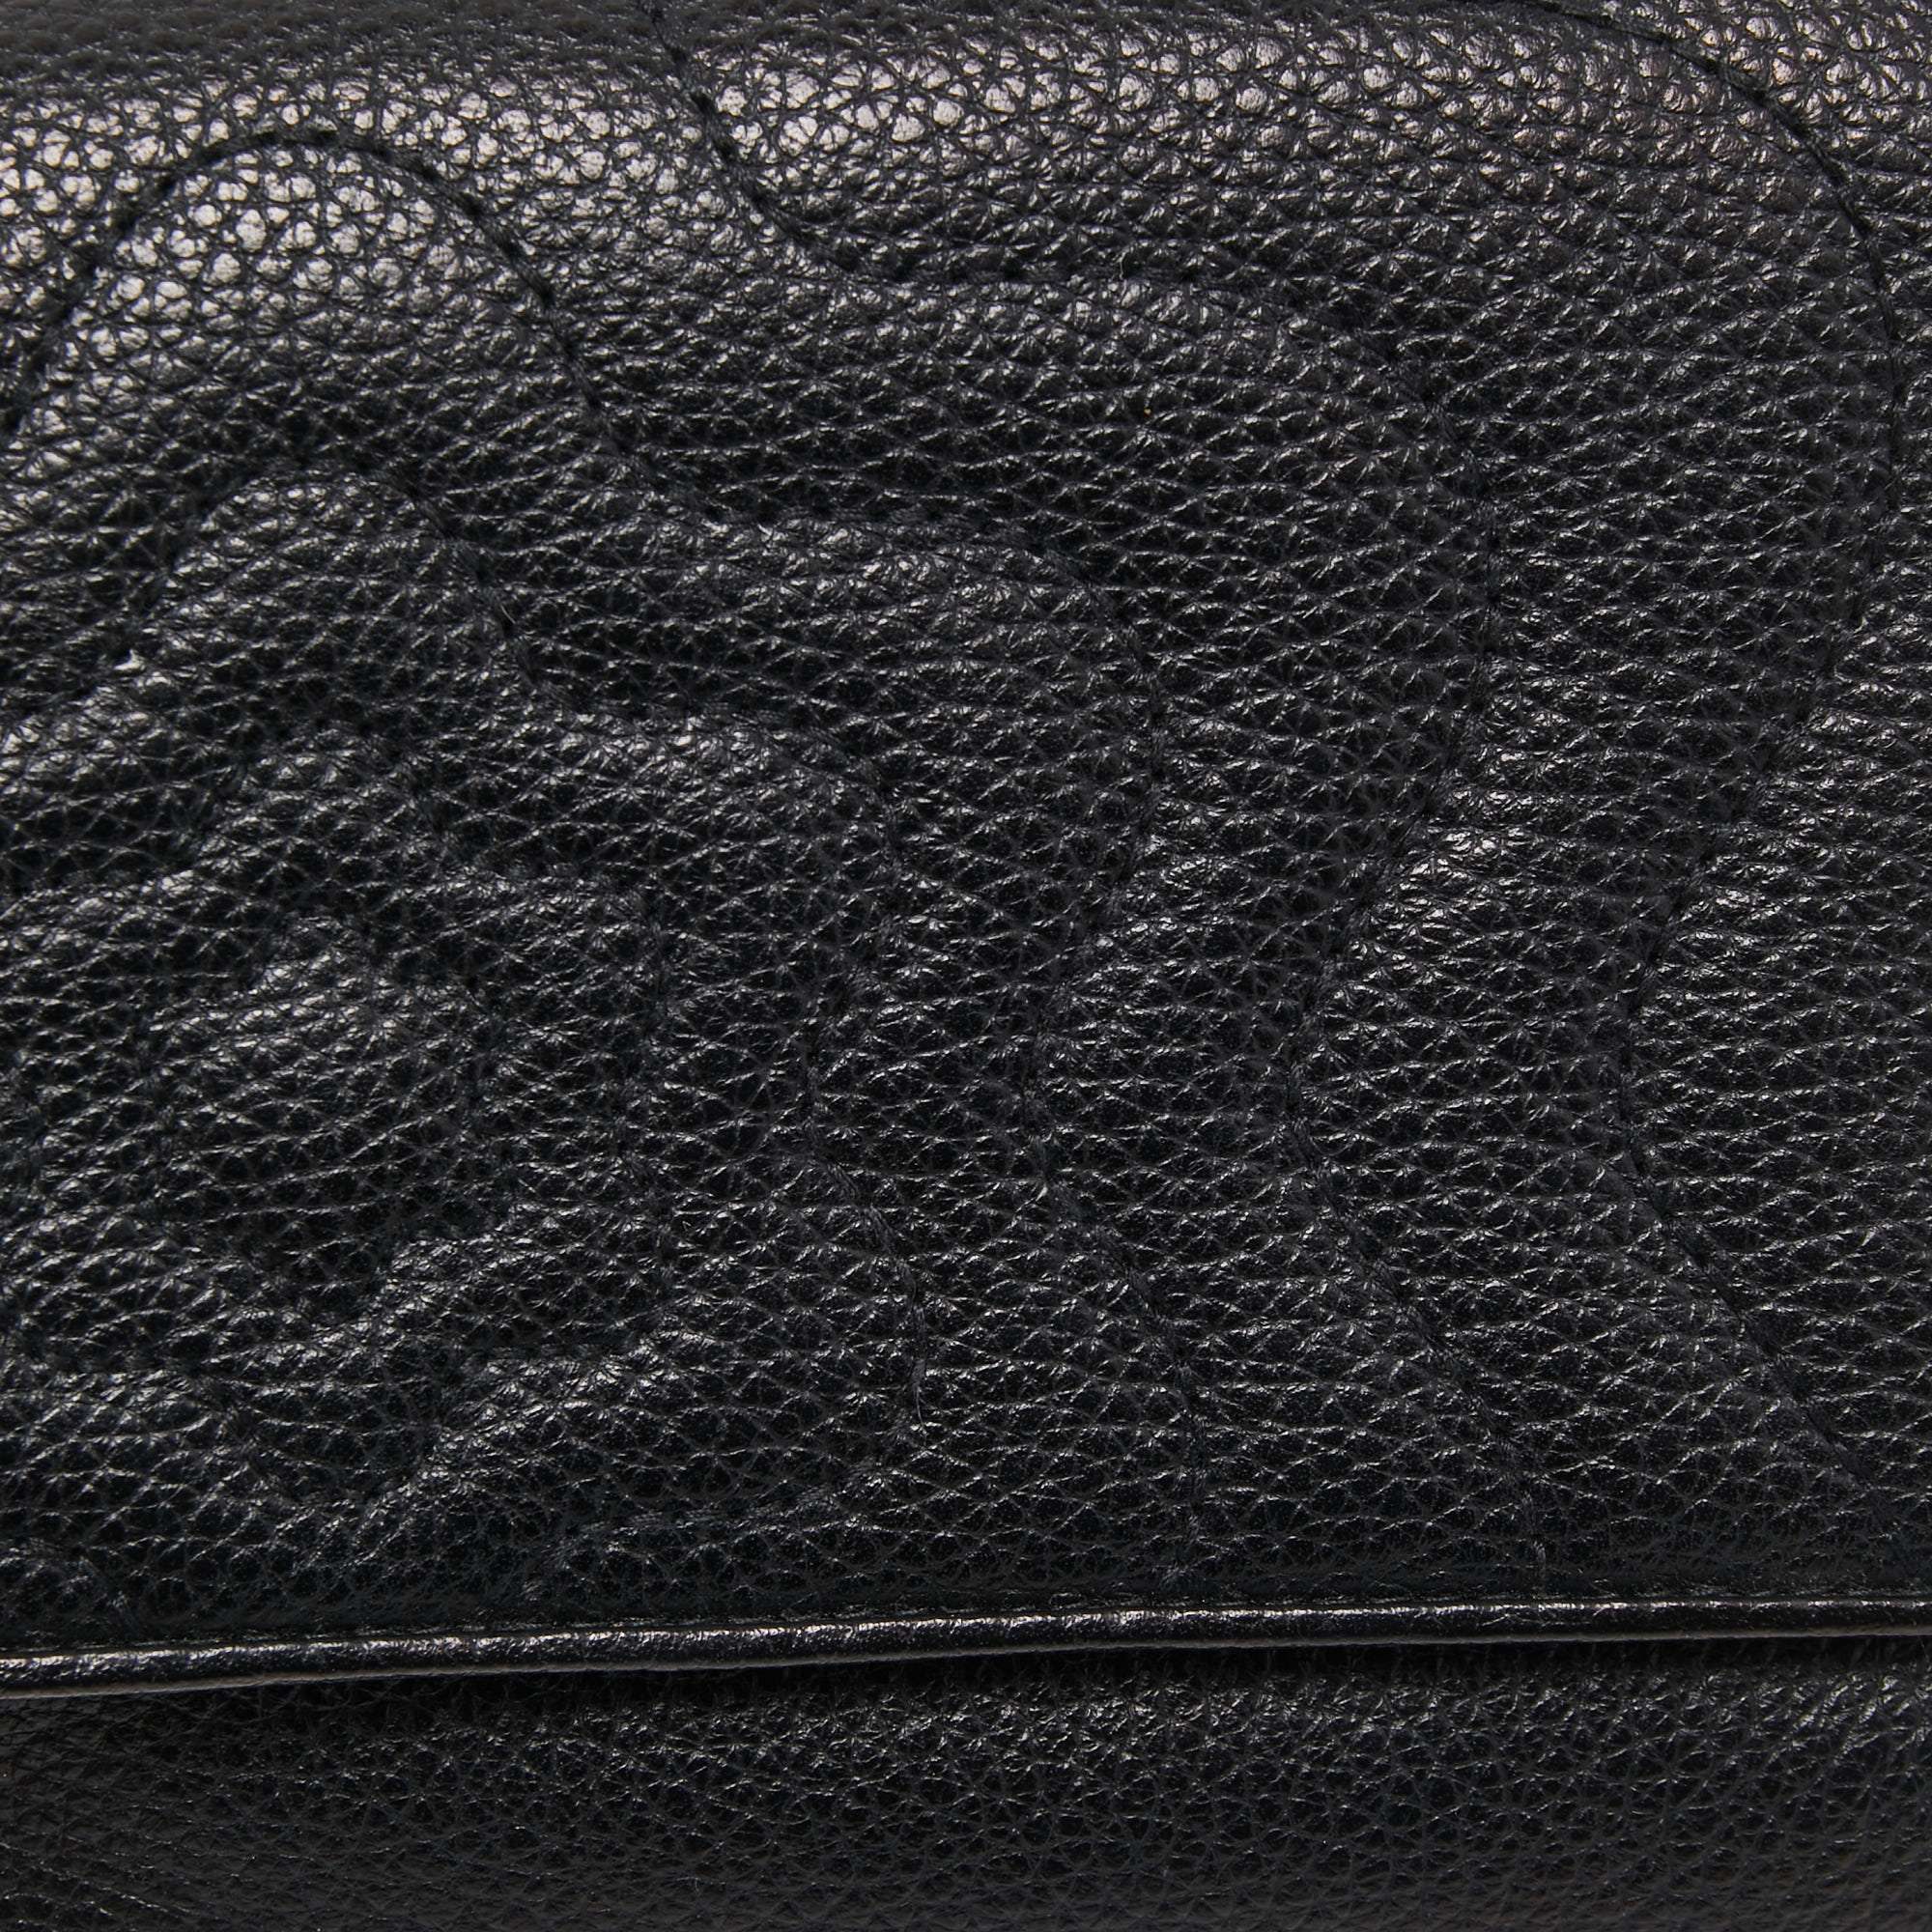 Montblanc Black Leather Starisma Trifold Wallet